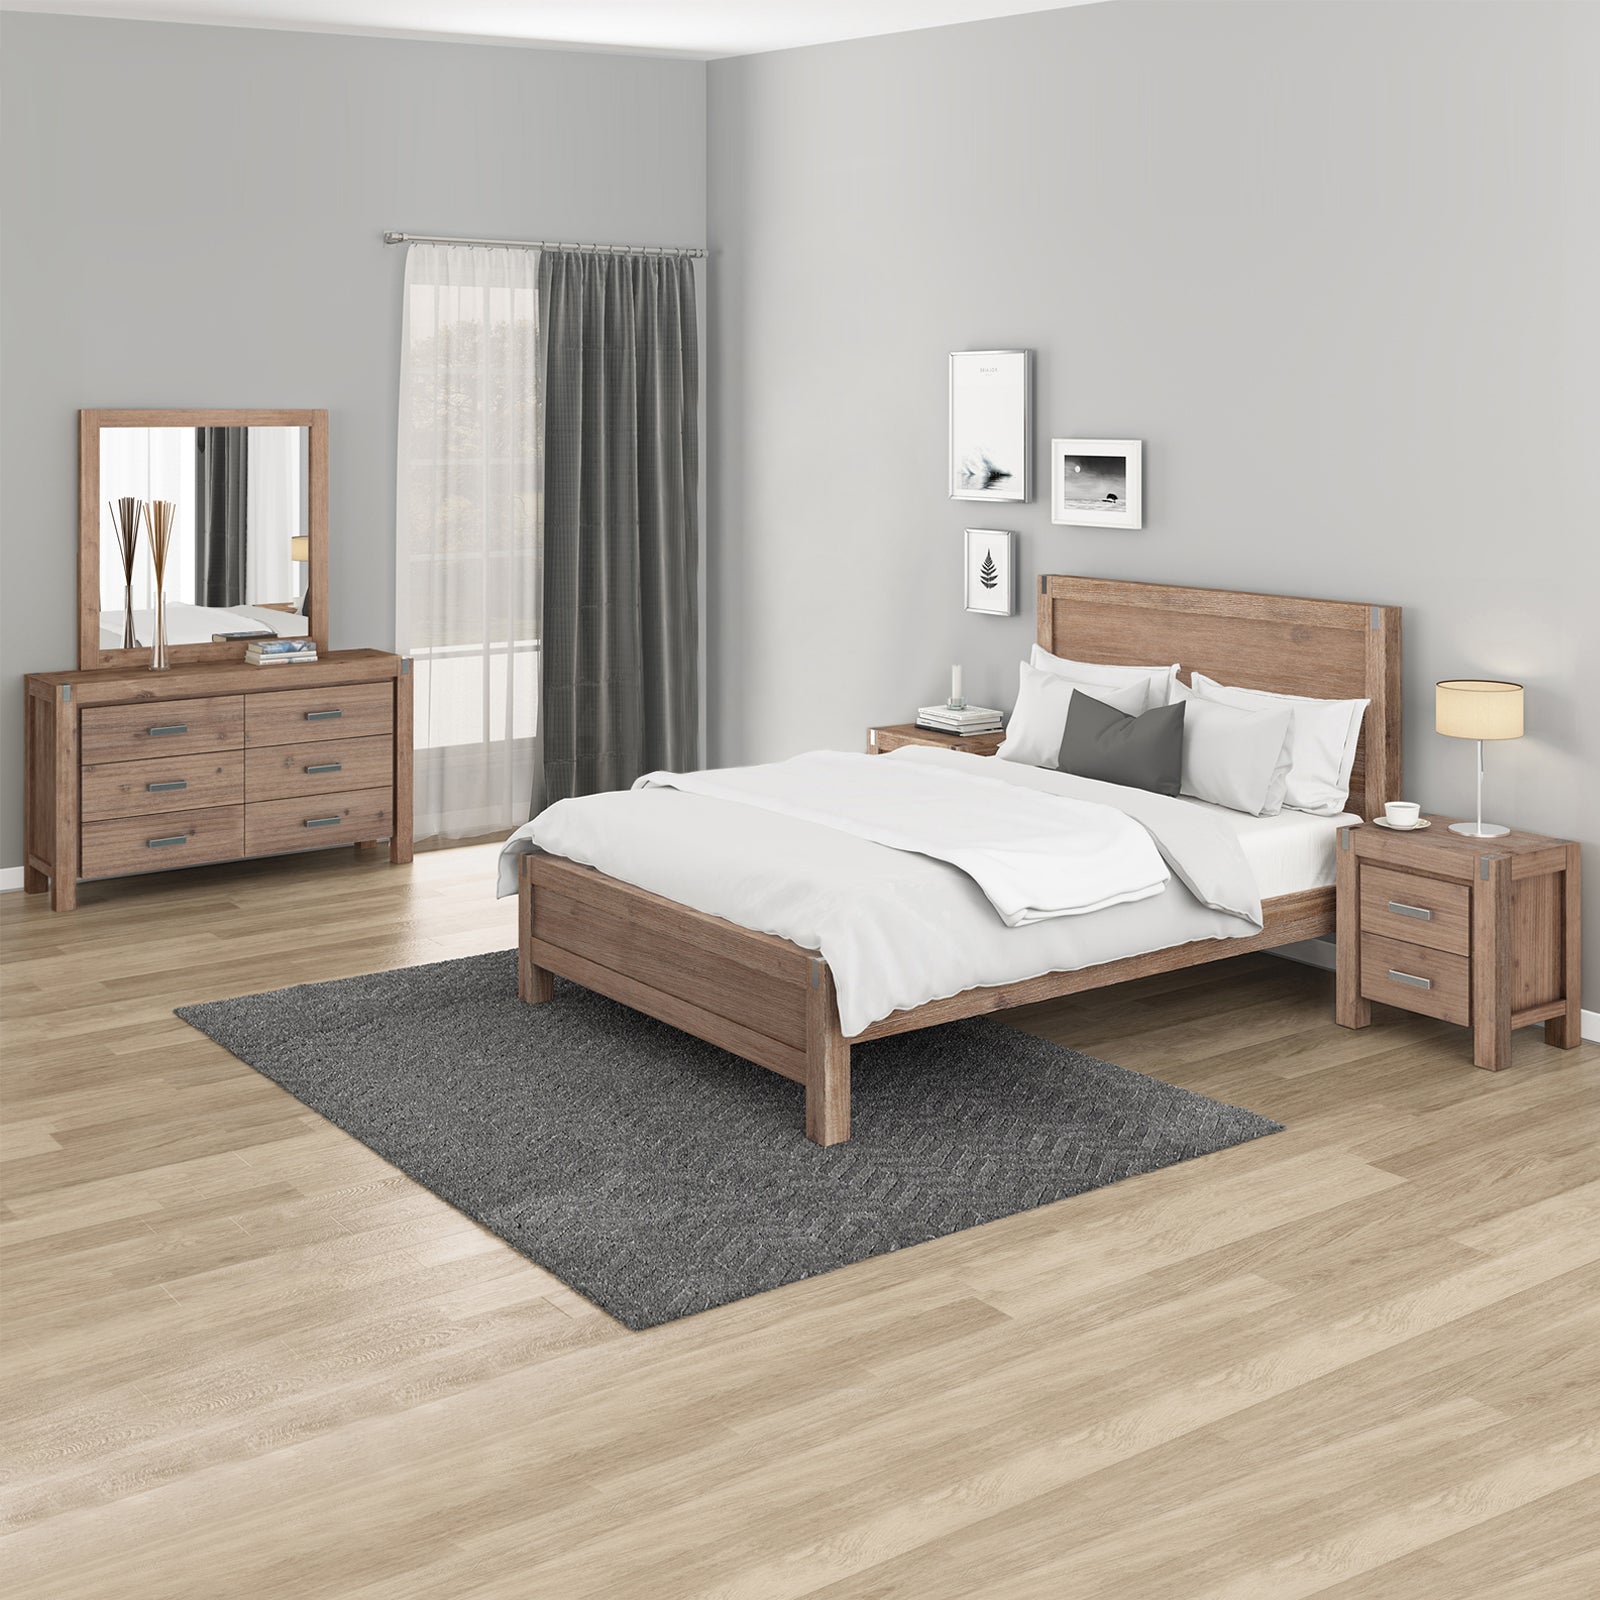 Noor 4 Pieces King Size Bedroom Suite Oak Colour with Dresser